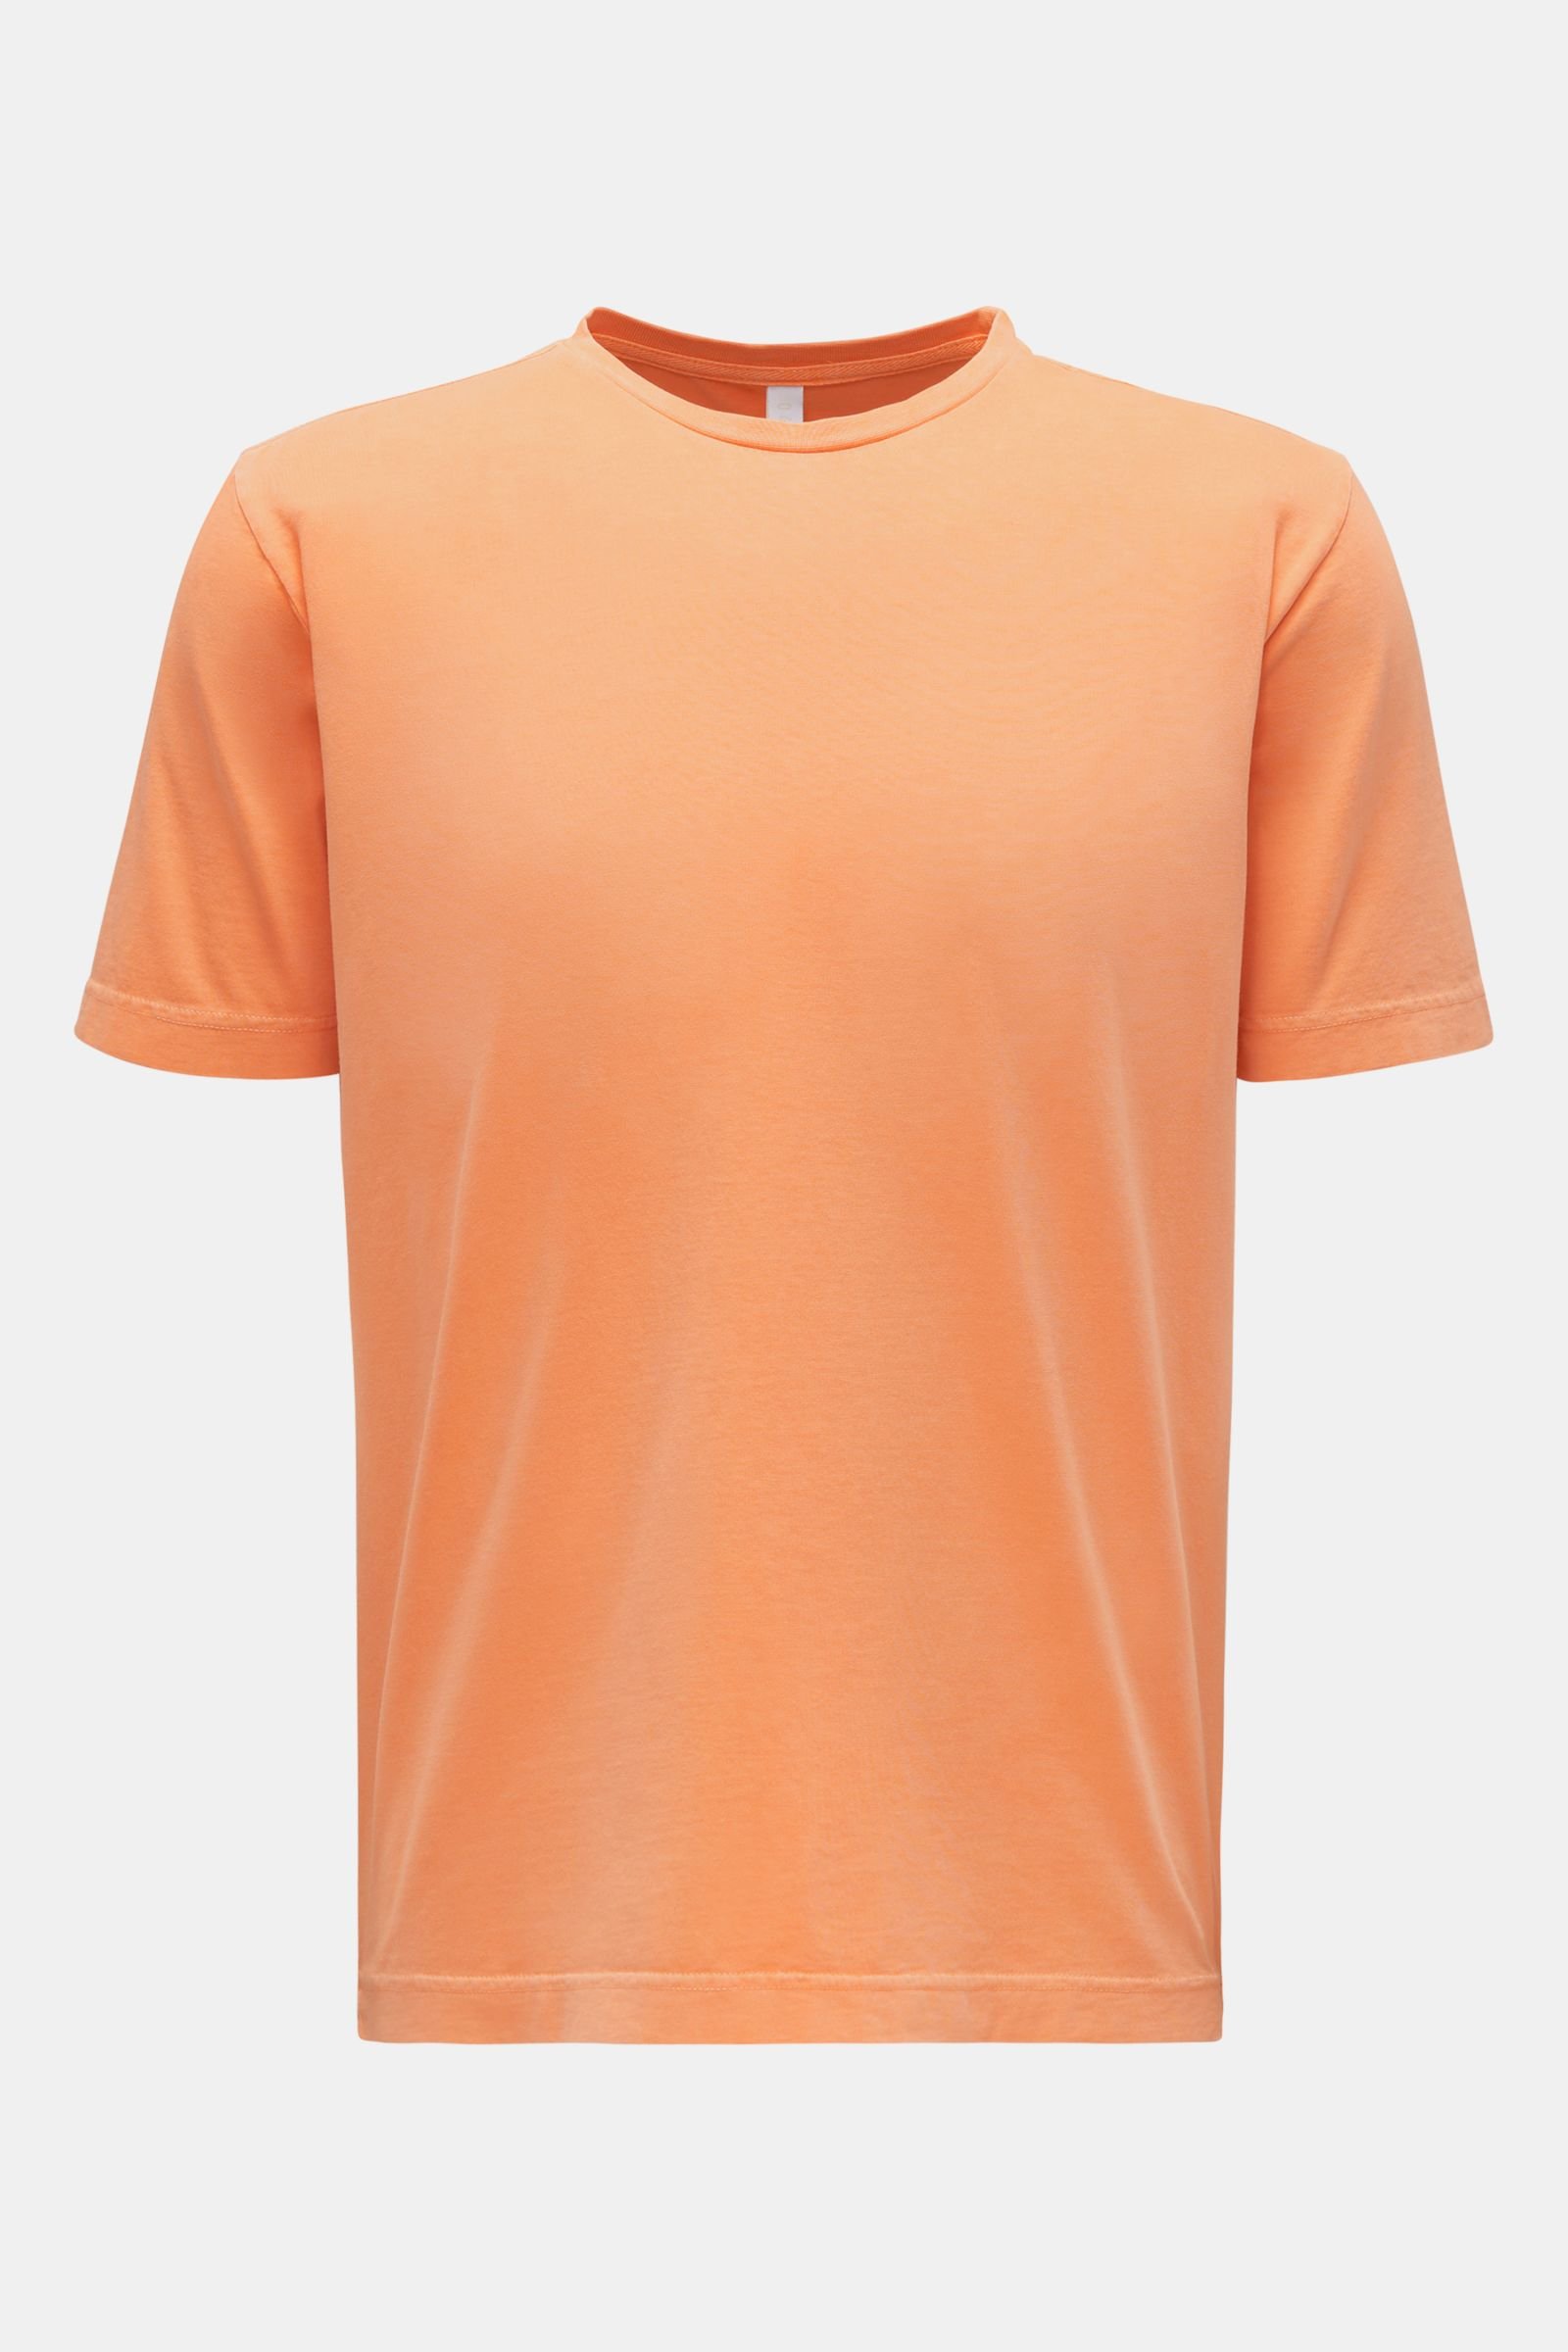 Crew neck T-shirt 'Jersey Tee' orange